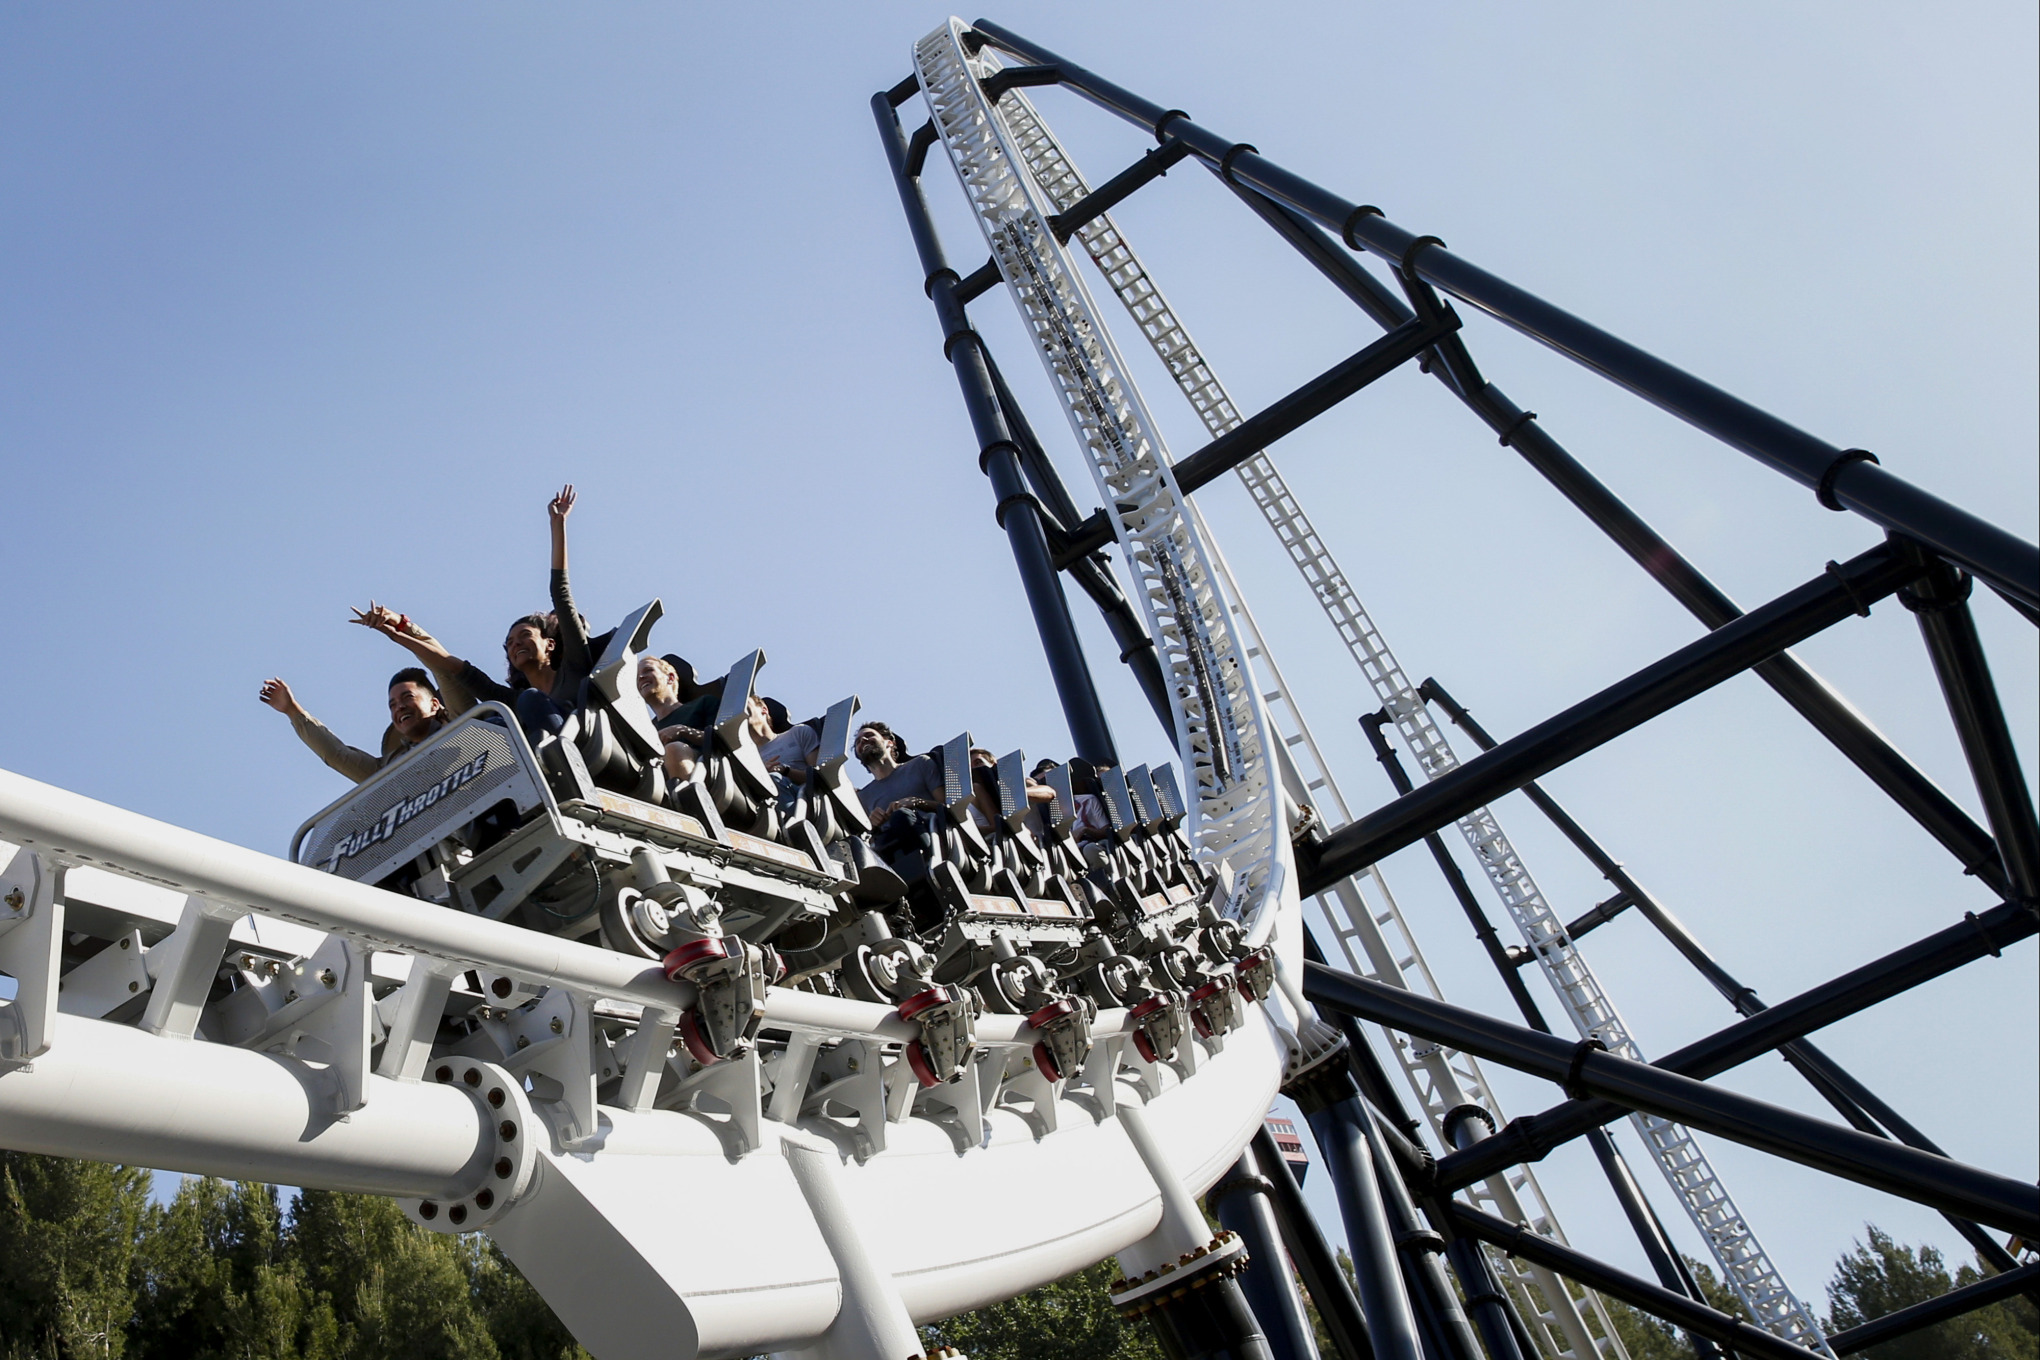 Six Flags Rides & Attractions  Magic Mountain in Santa Clarita near LA